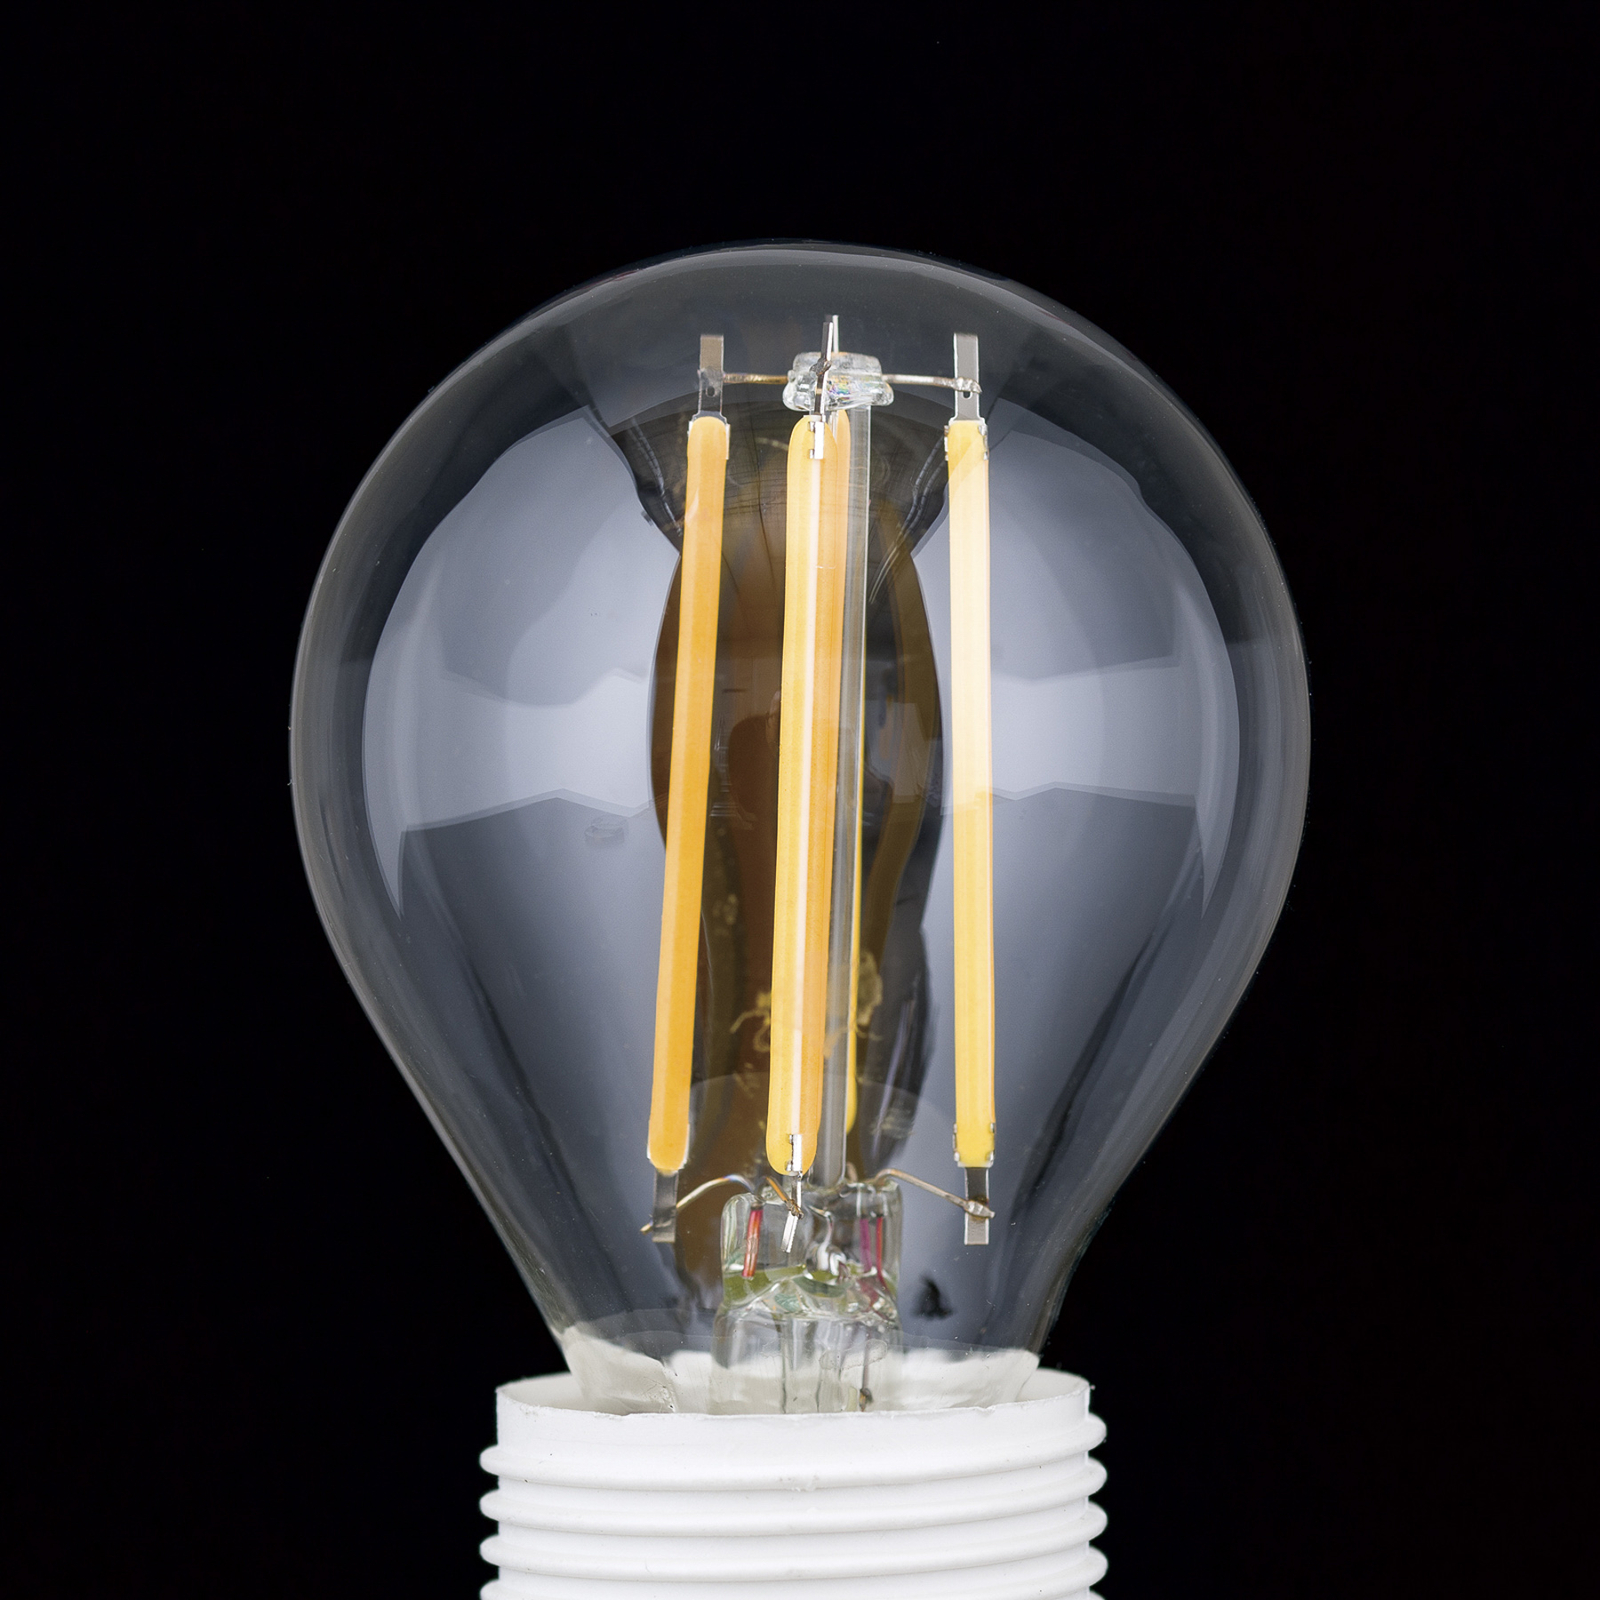 LED filament lamp E27 G45 helder 6W 827 720lm dimbaar